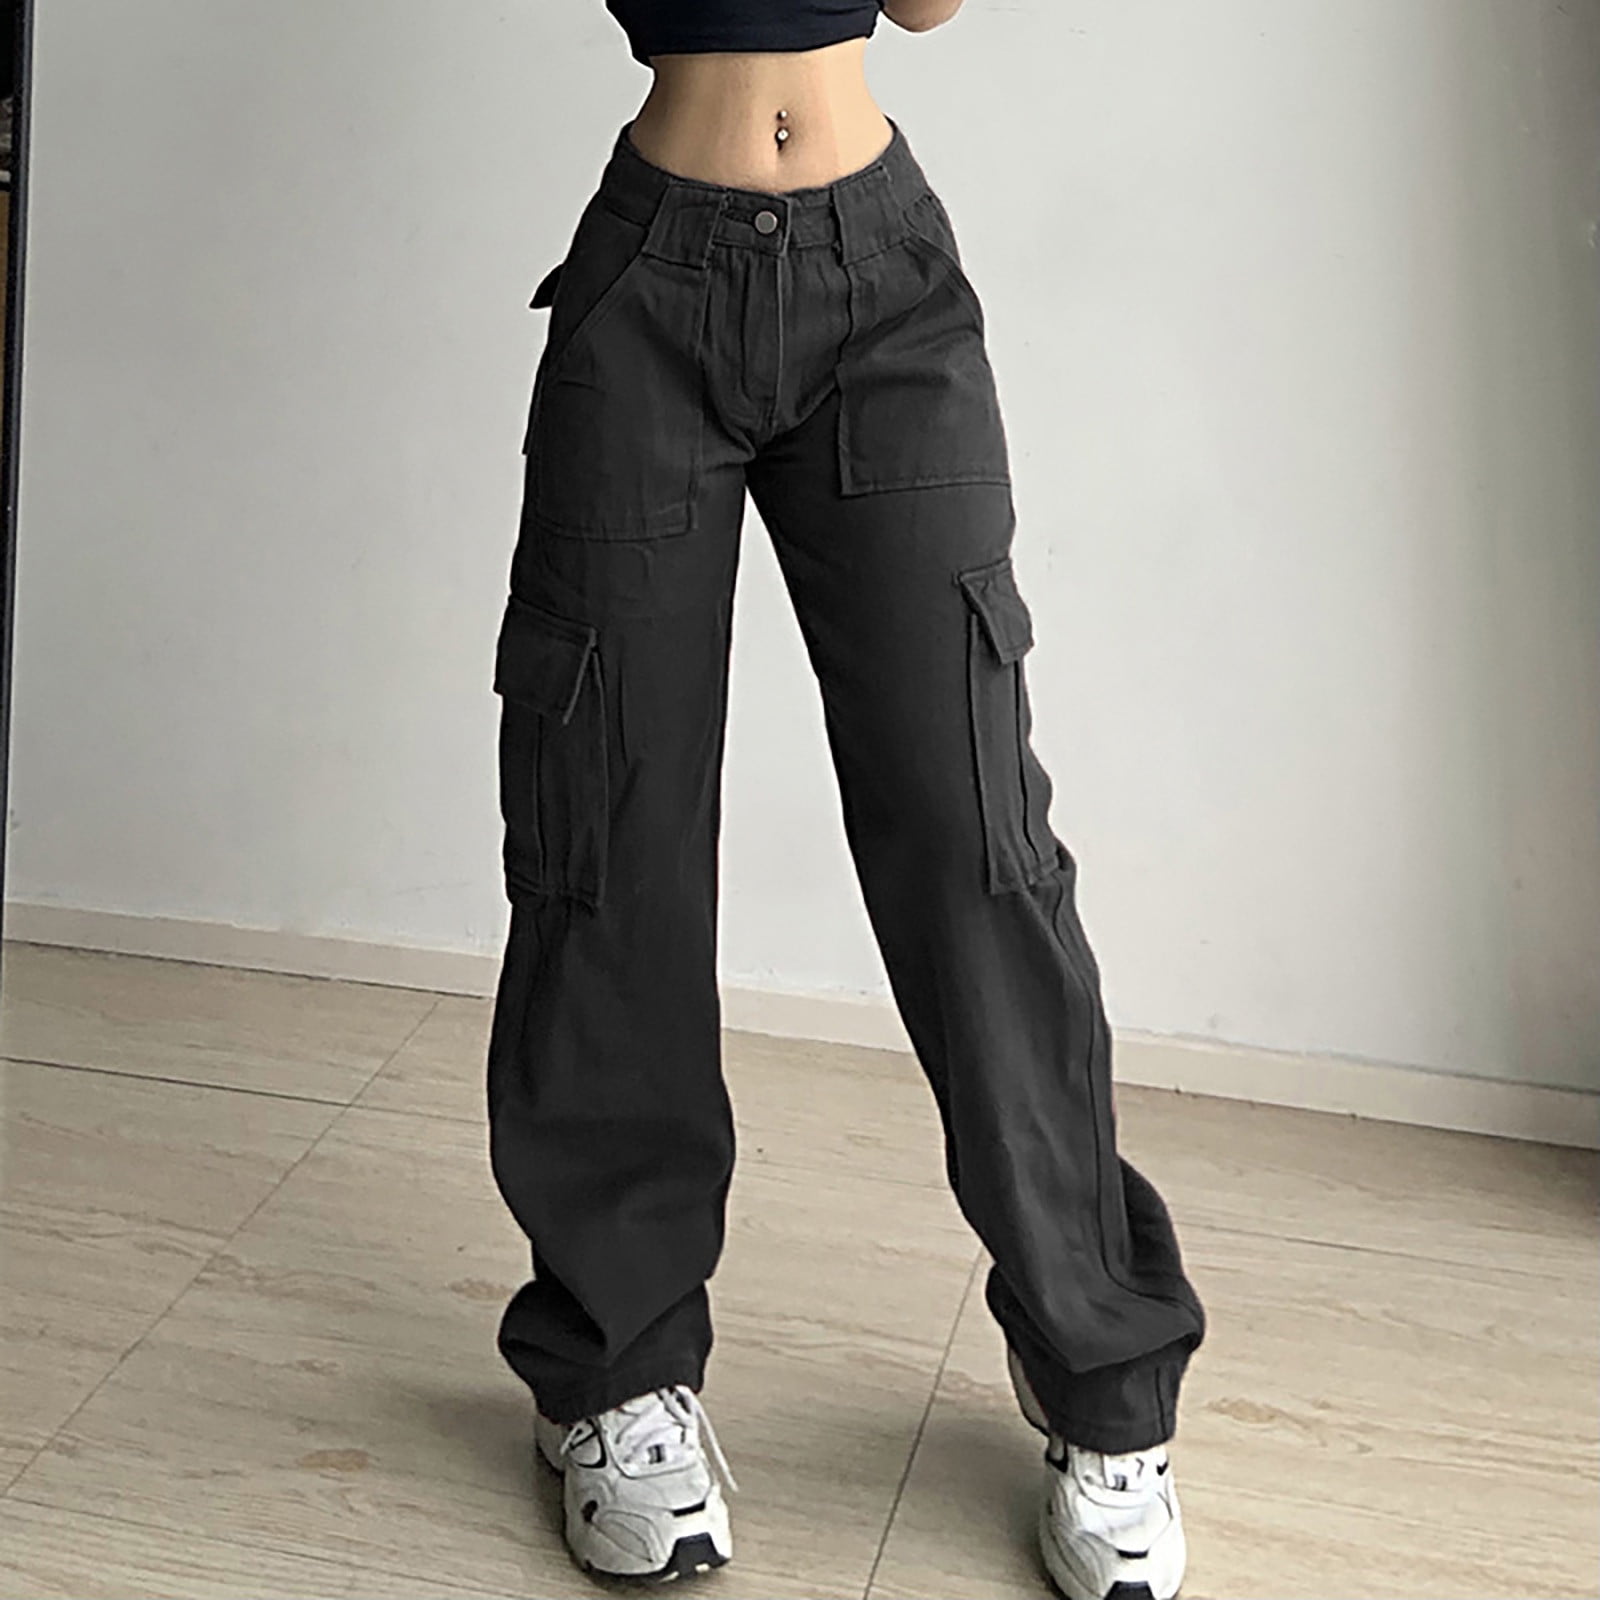 JNGSA Women's High Waist Cargo Jeans Flap Wide Leg Denim Pants with Pocket  Work Suit Straight Leg Jeans for Women Stretch Denim Pants Black M 